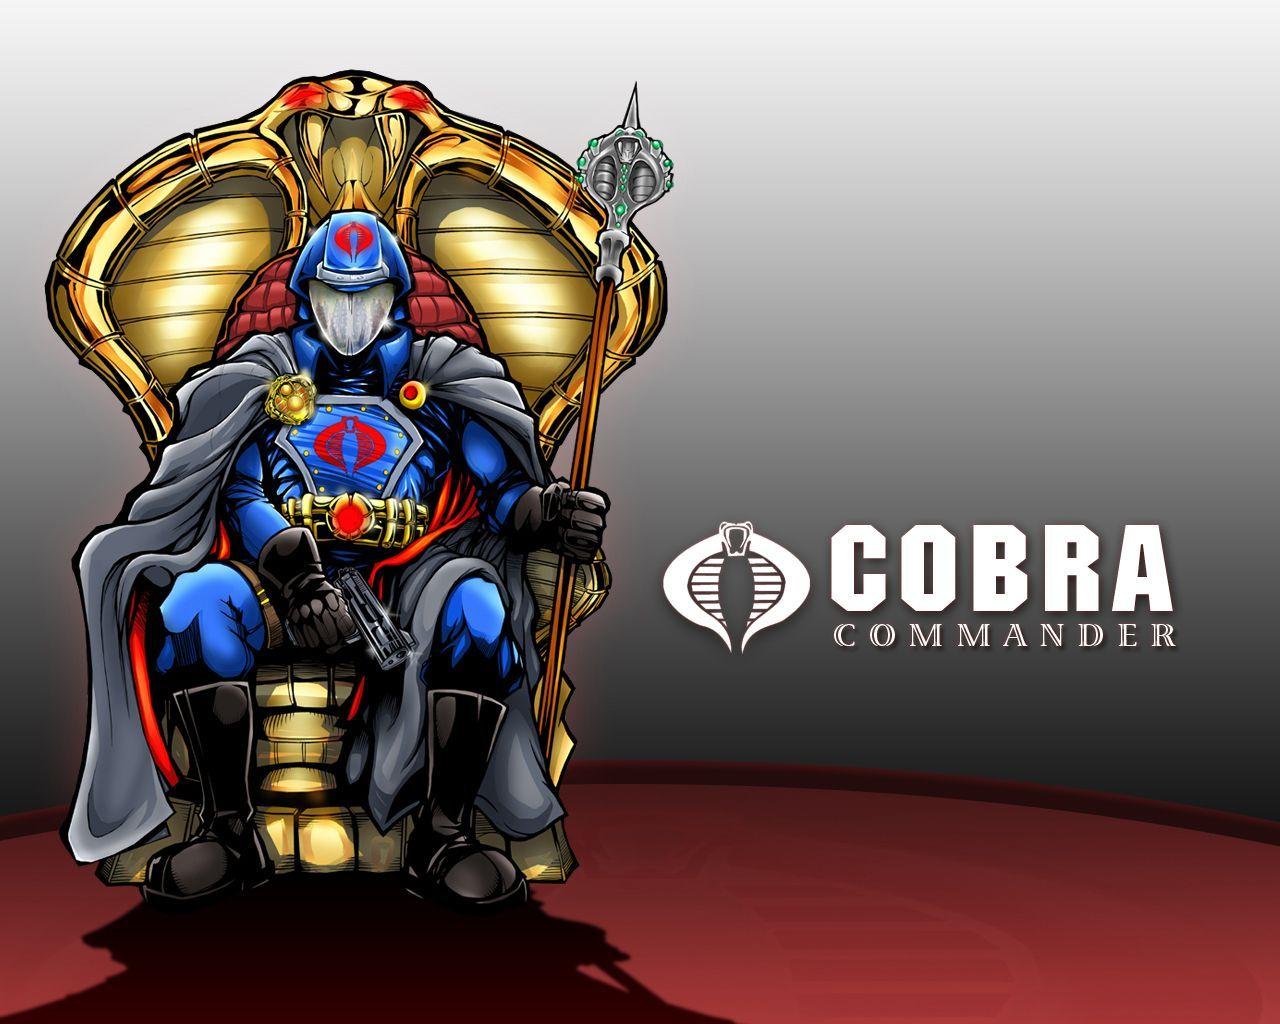 Cobra Commander Wallpaper 2. GI Joe